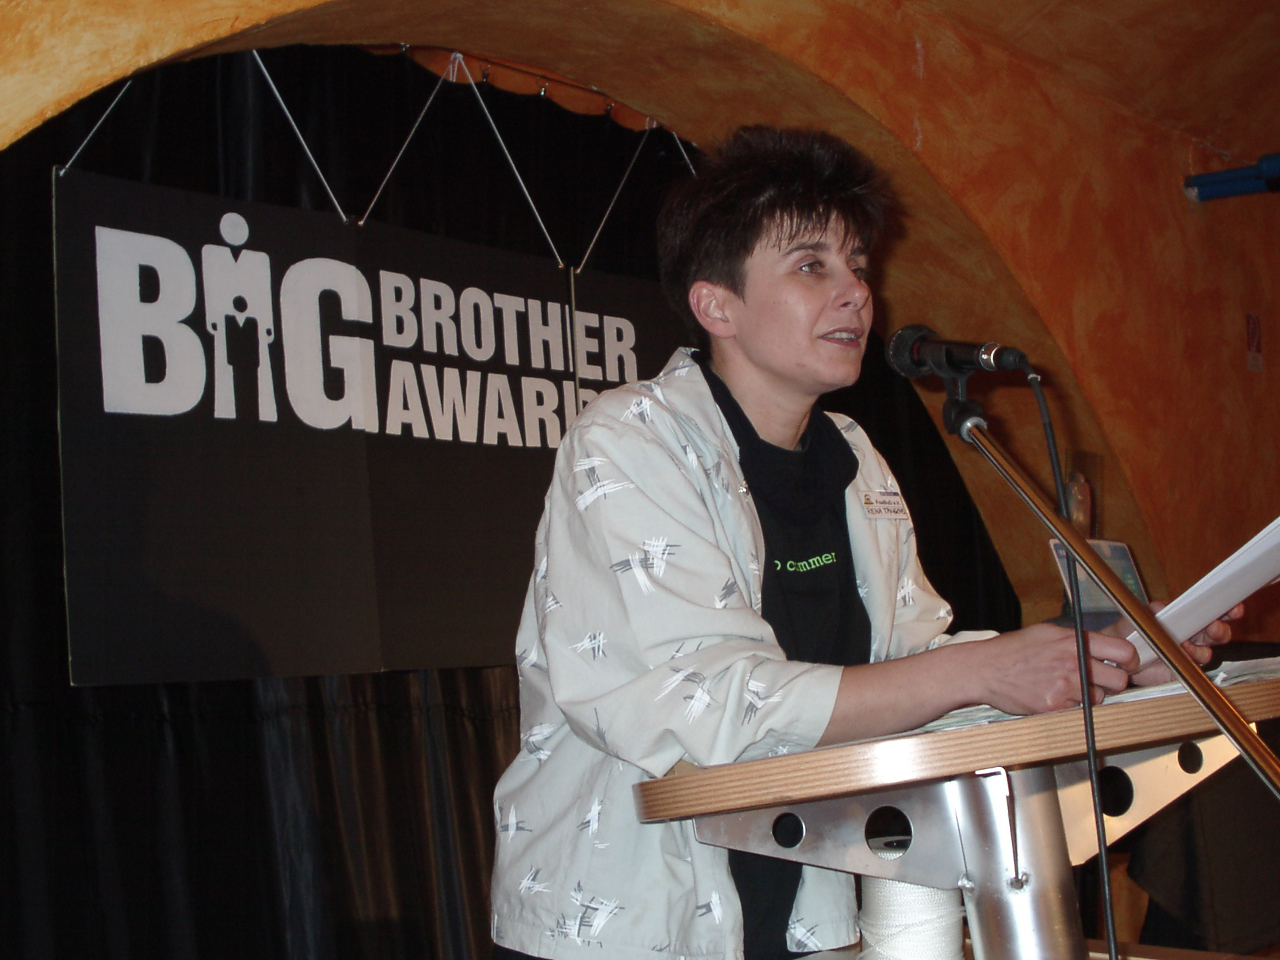 Rena Tangens at the lectern at the first BigBrotherAwards 2000